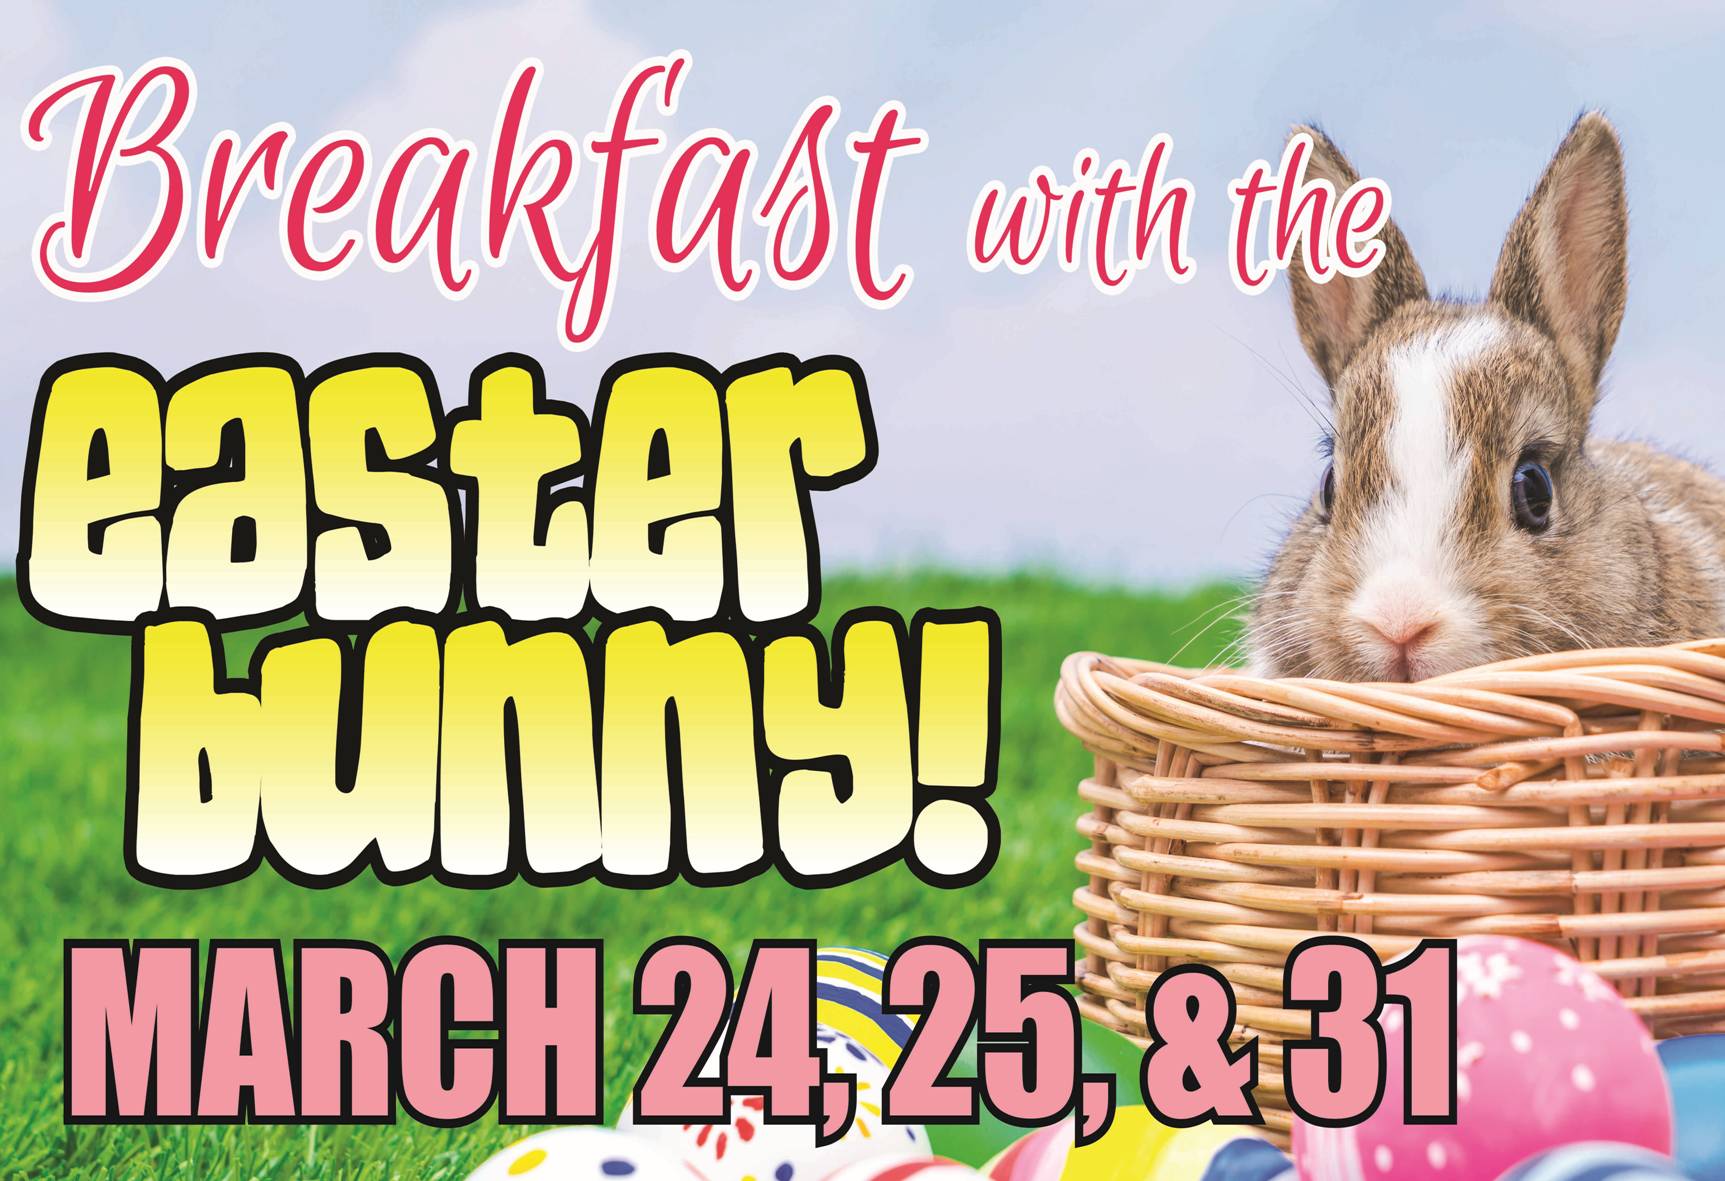 Breakfast with the Easter Bunny - Buffalo Zoo